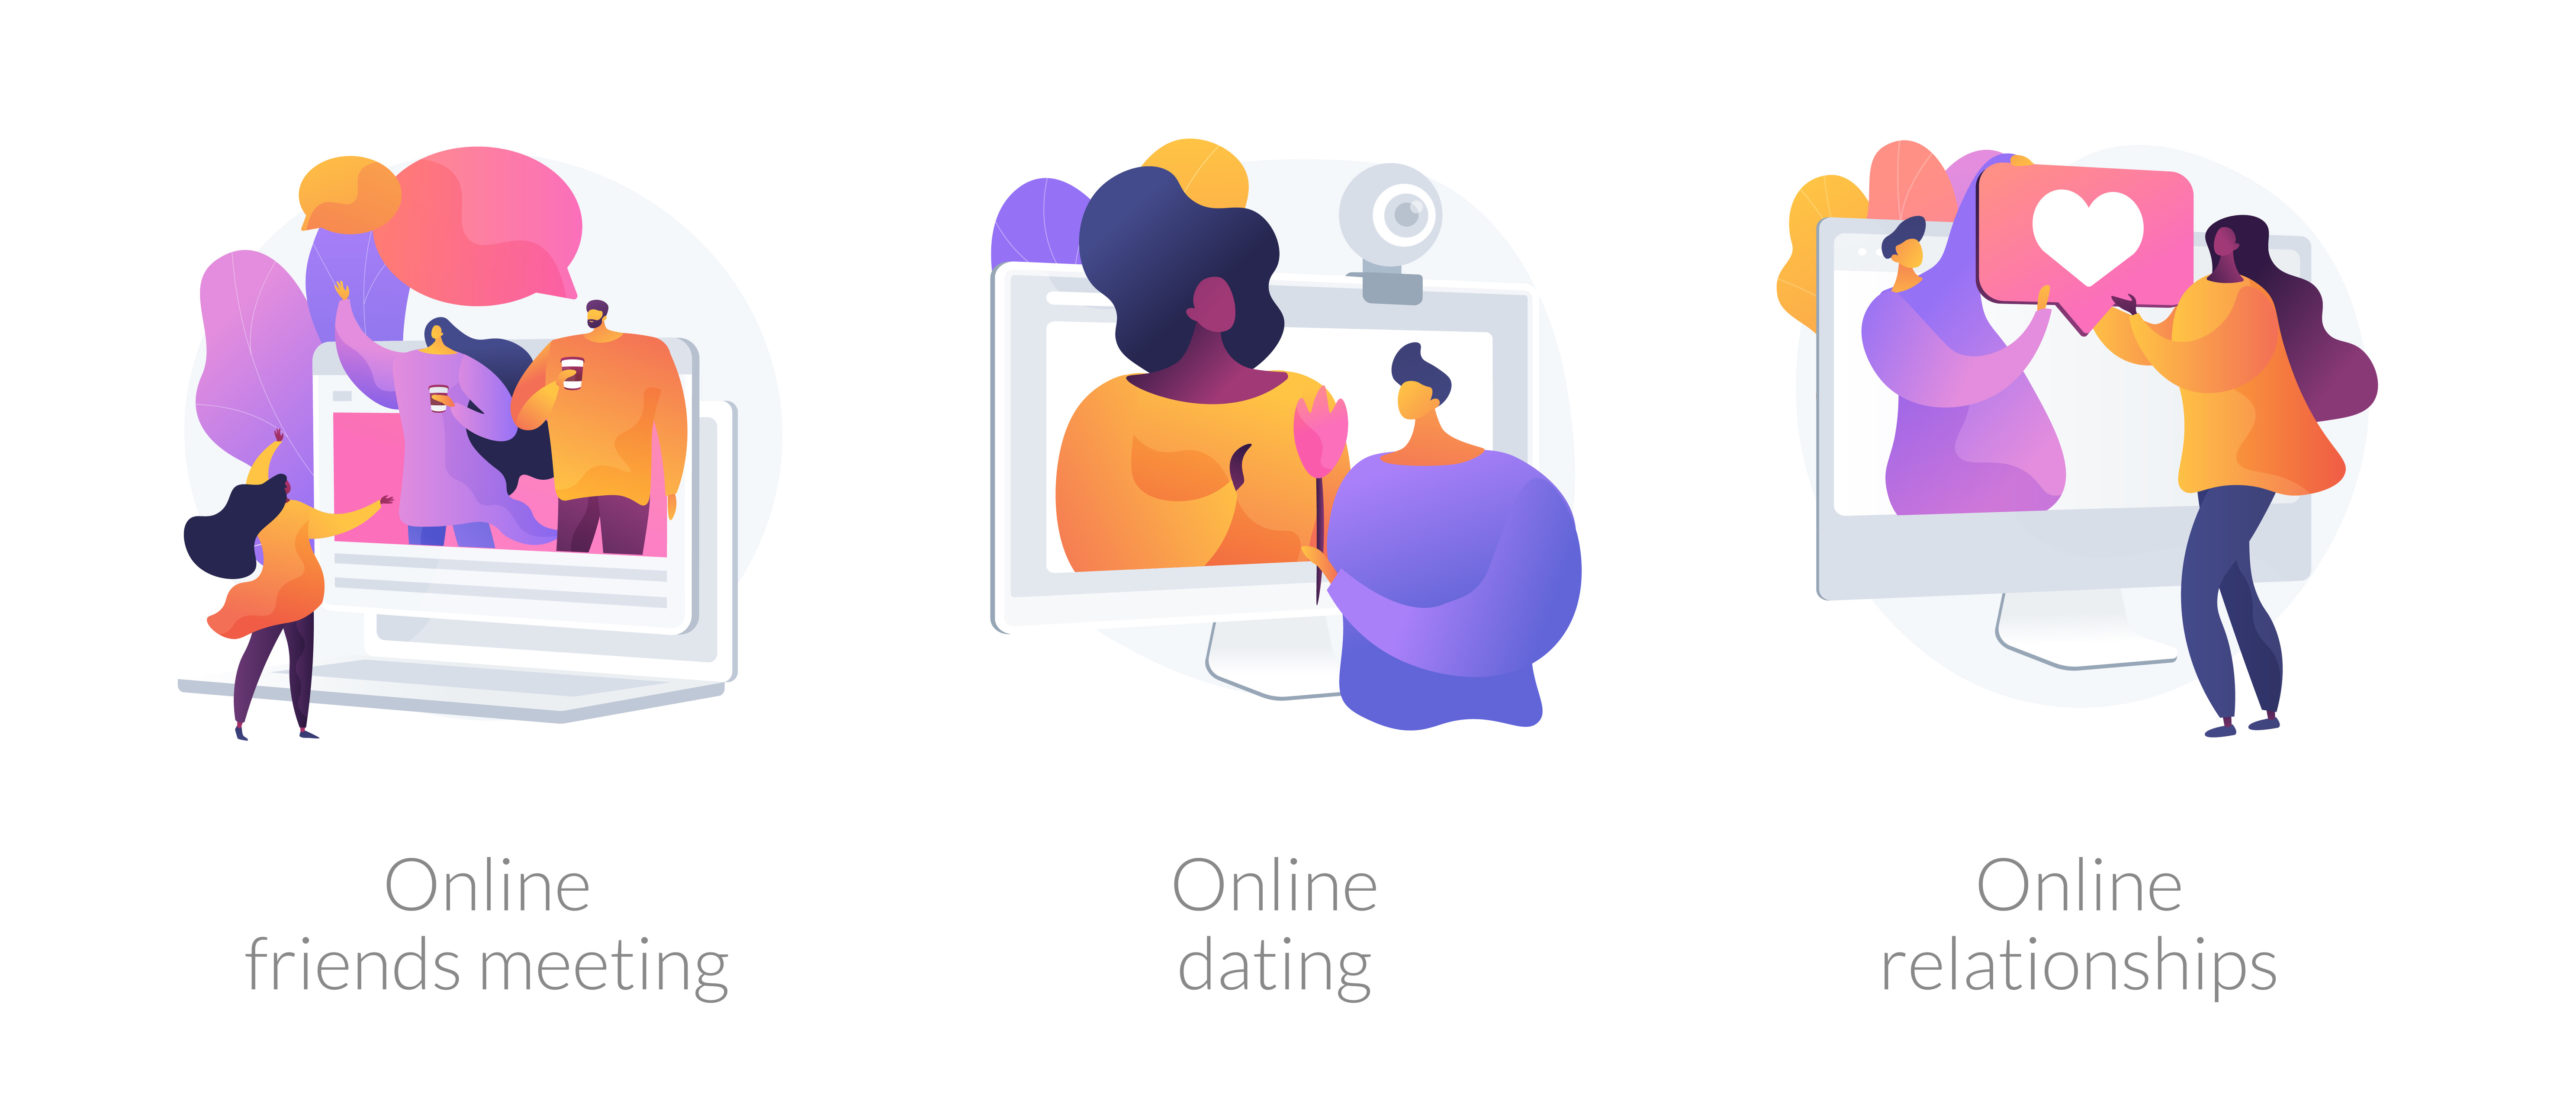 creative headlines on online dating profile